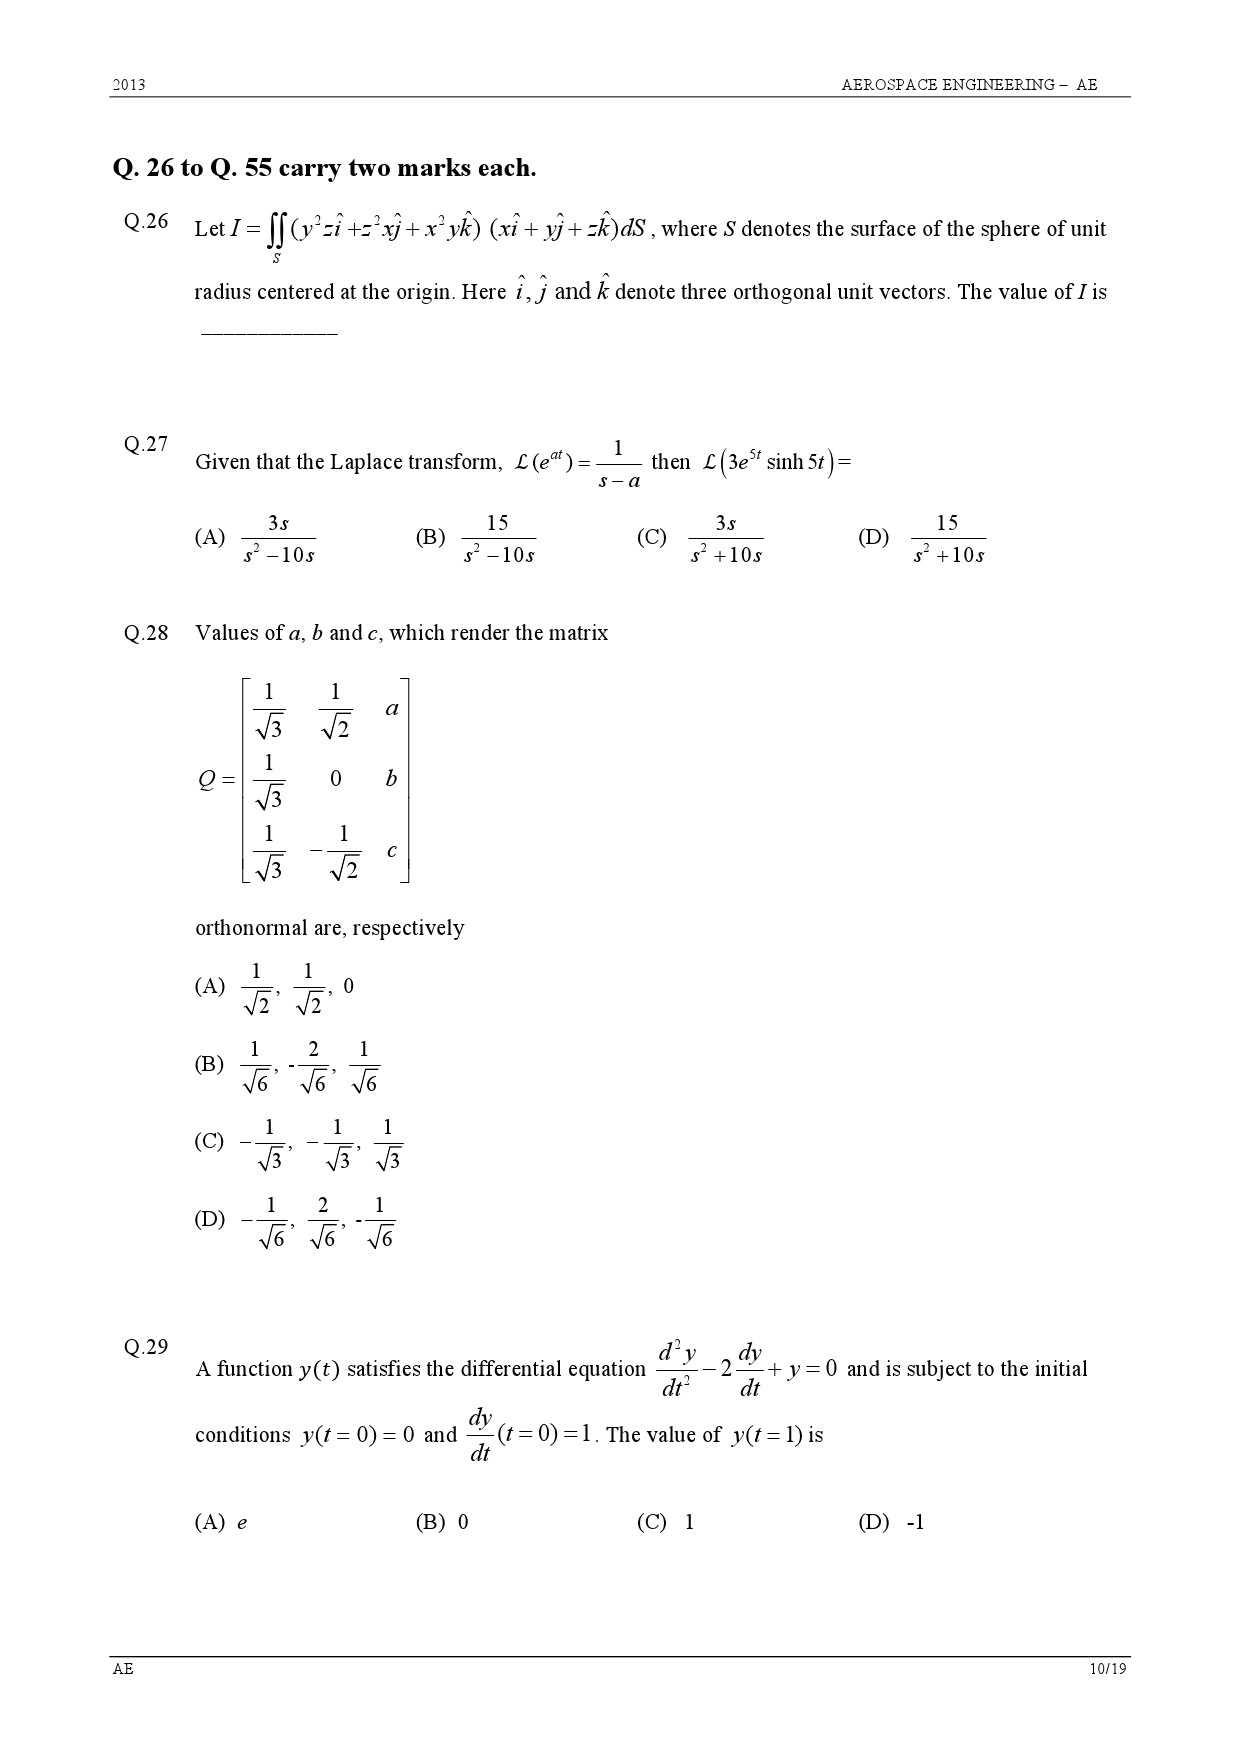 GATE Exam 2013 Aerospace Engineering Question Paper 10